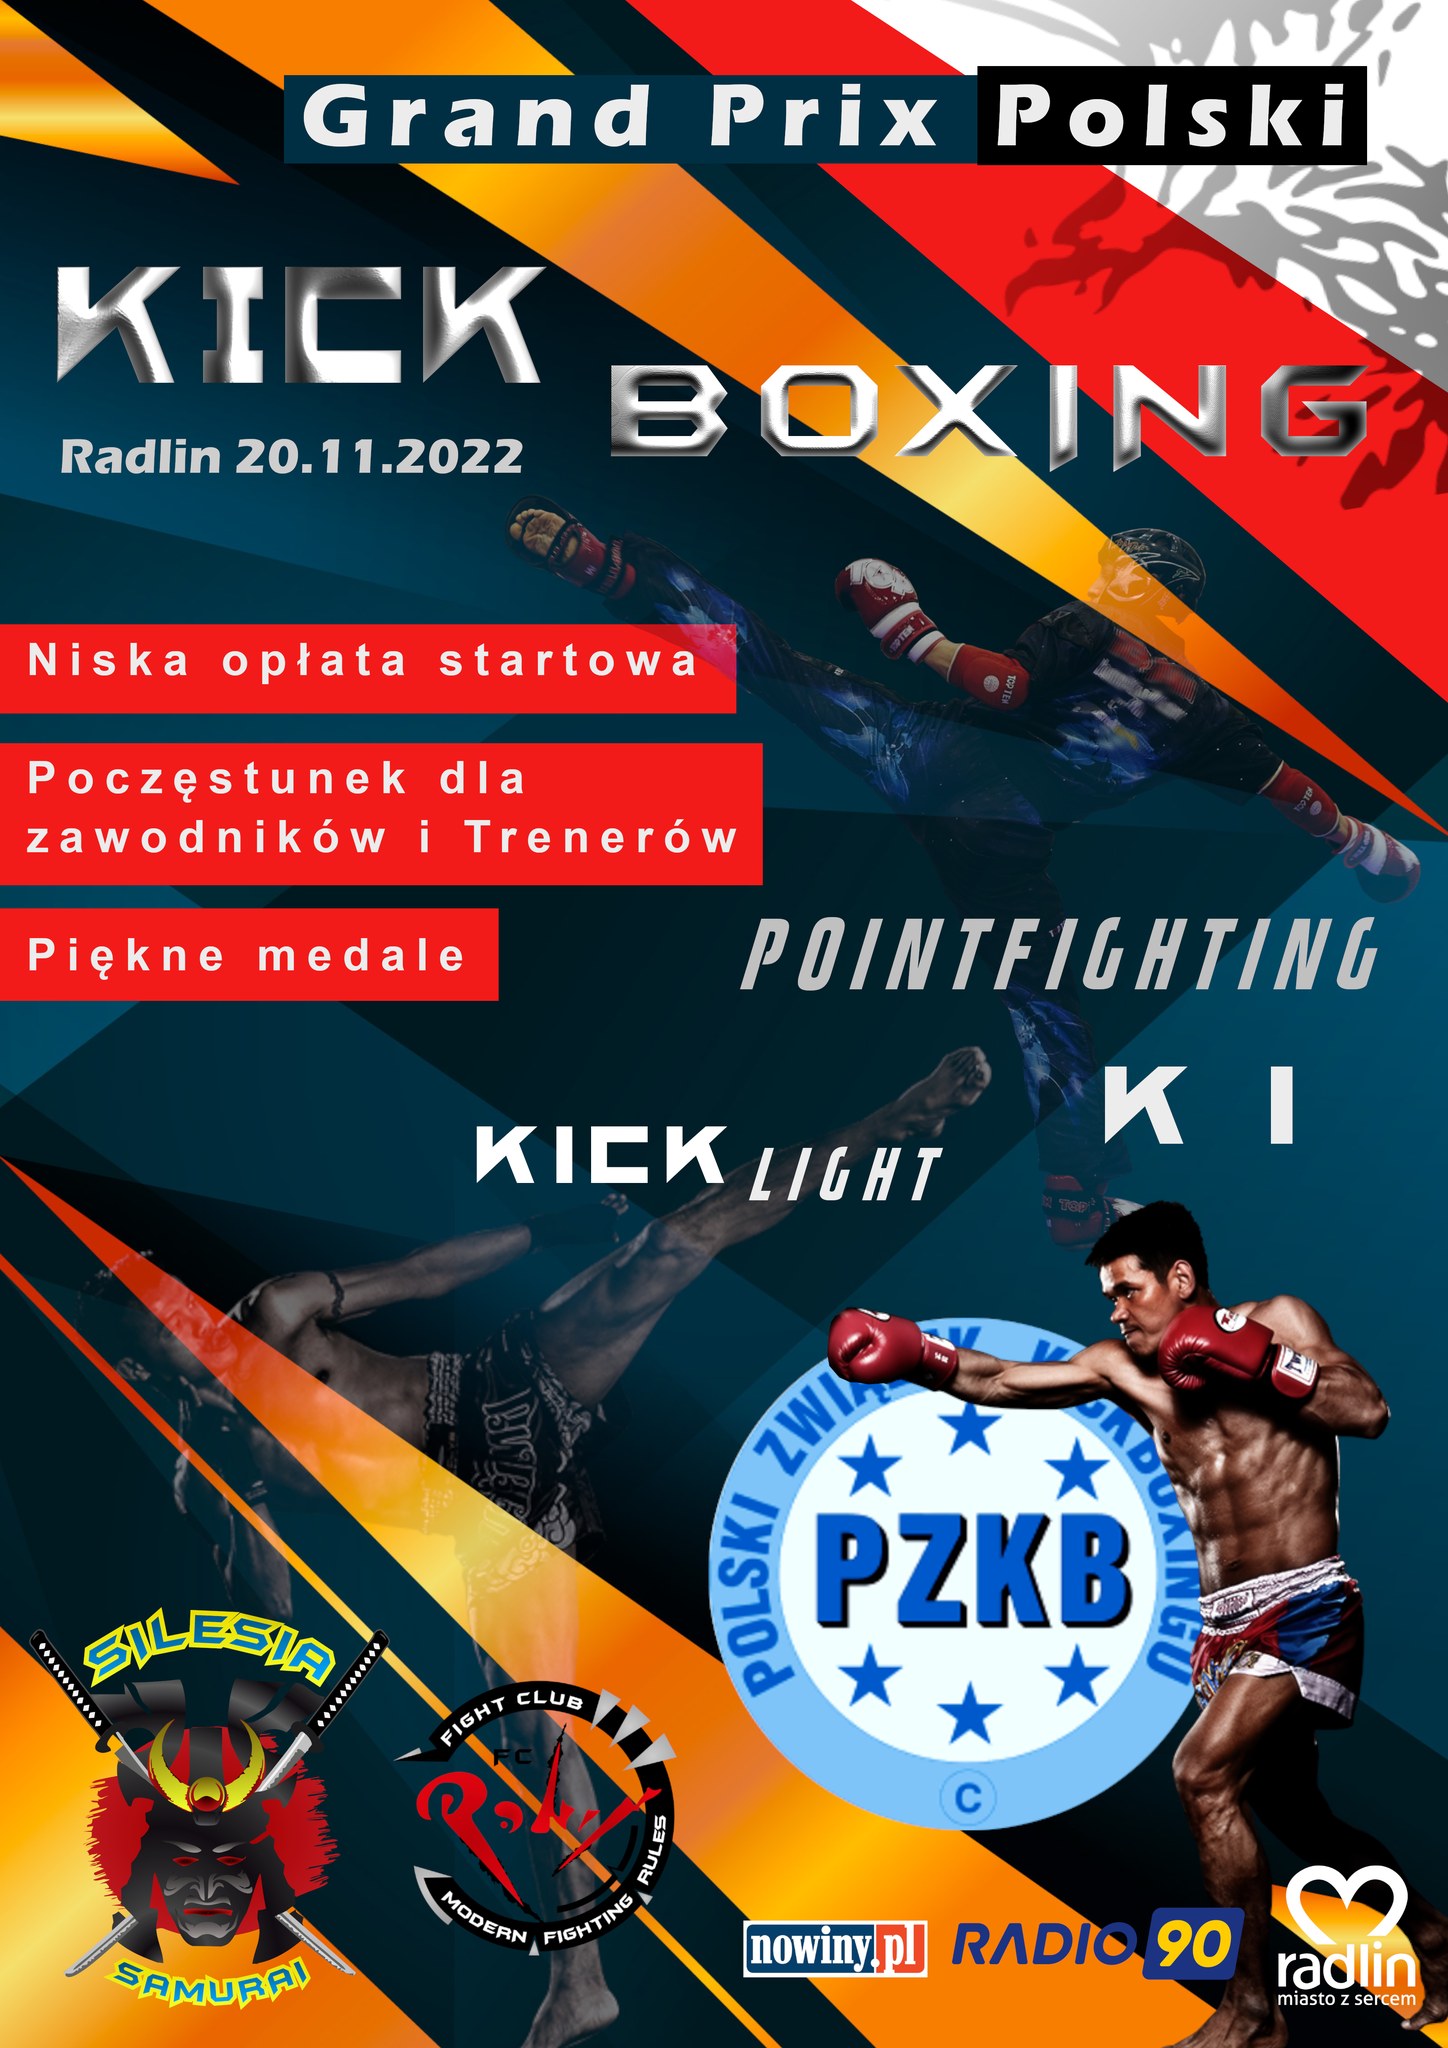 You are currently viewing KOMUNIKAT: GRAND PRIX Polski w Kickboxingu 20.11.2022 Radlin